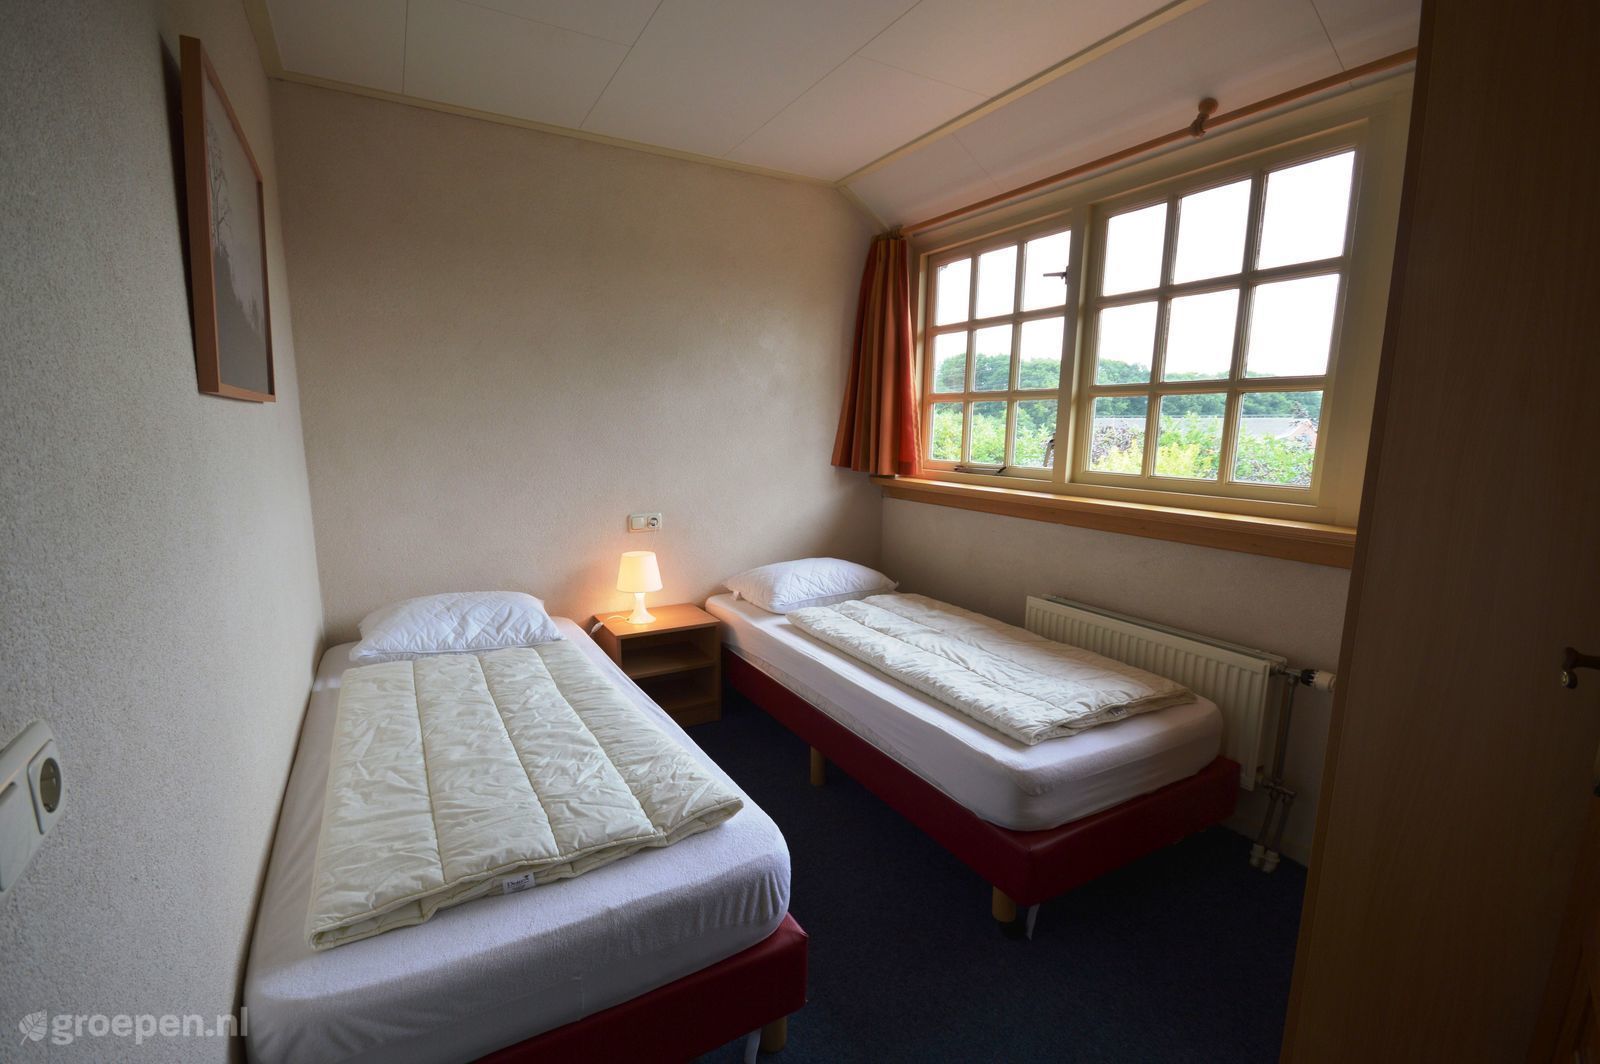 Group accommodation Ambt-Delden